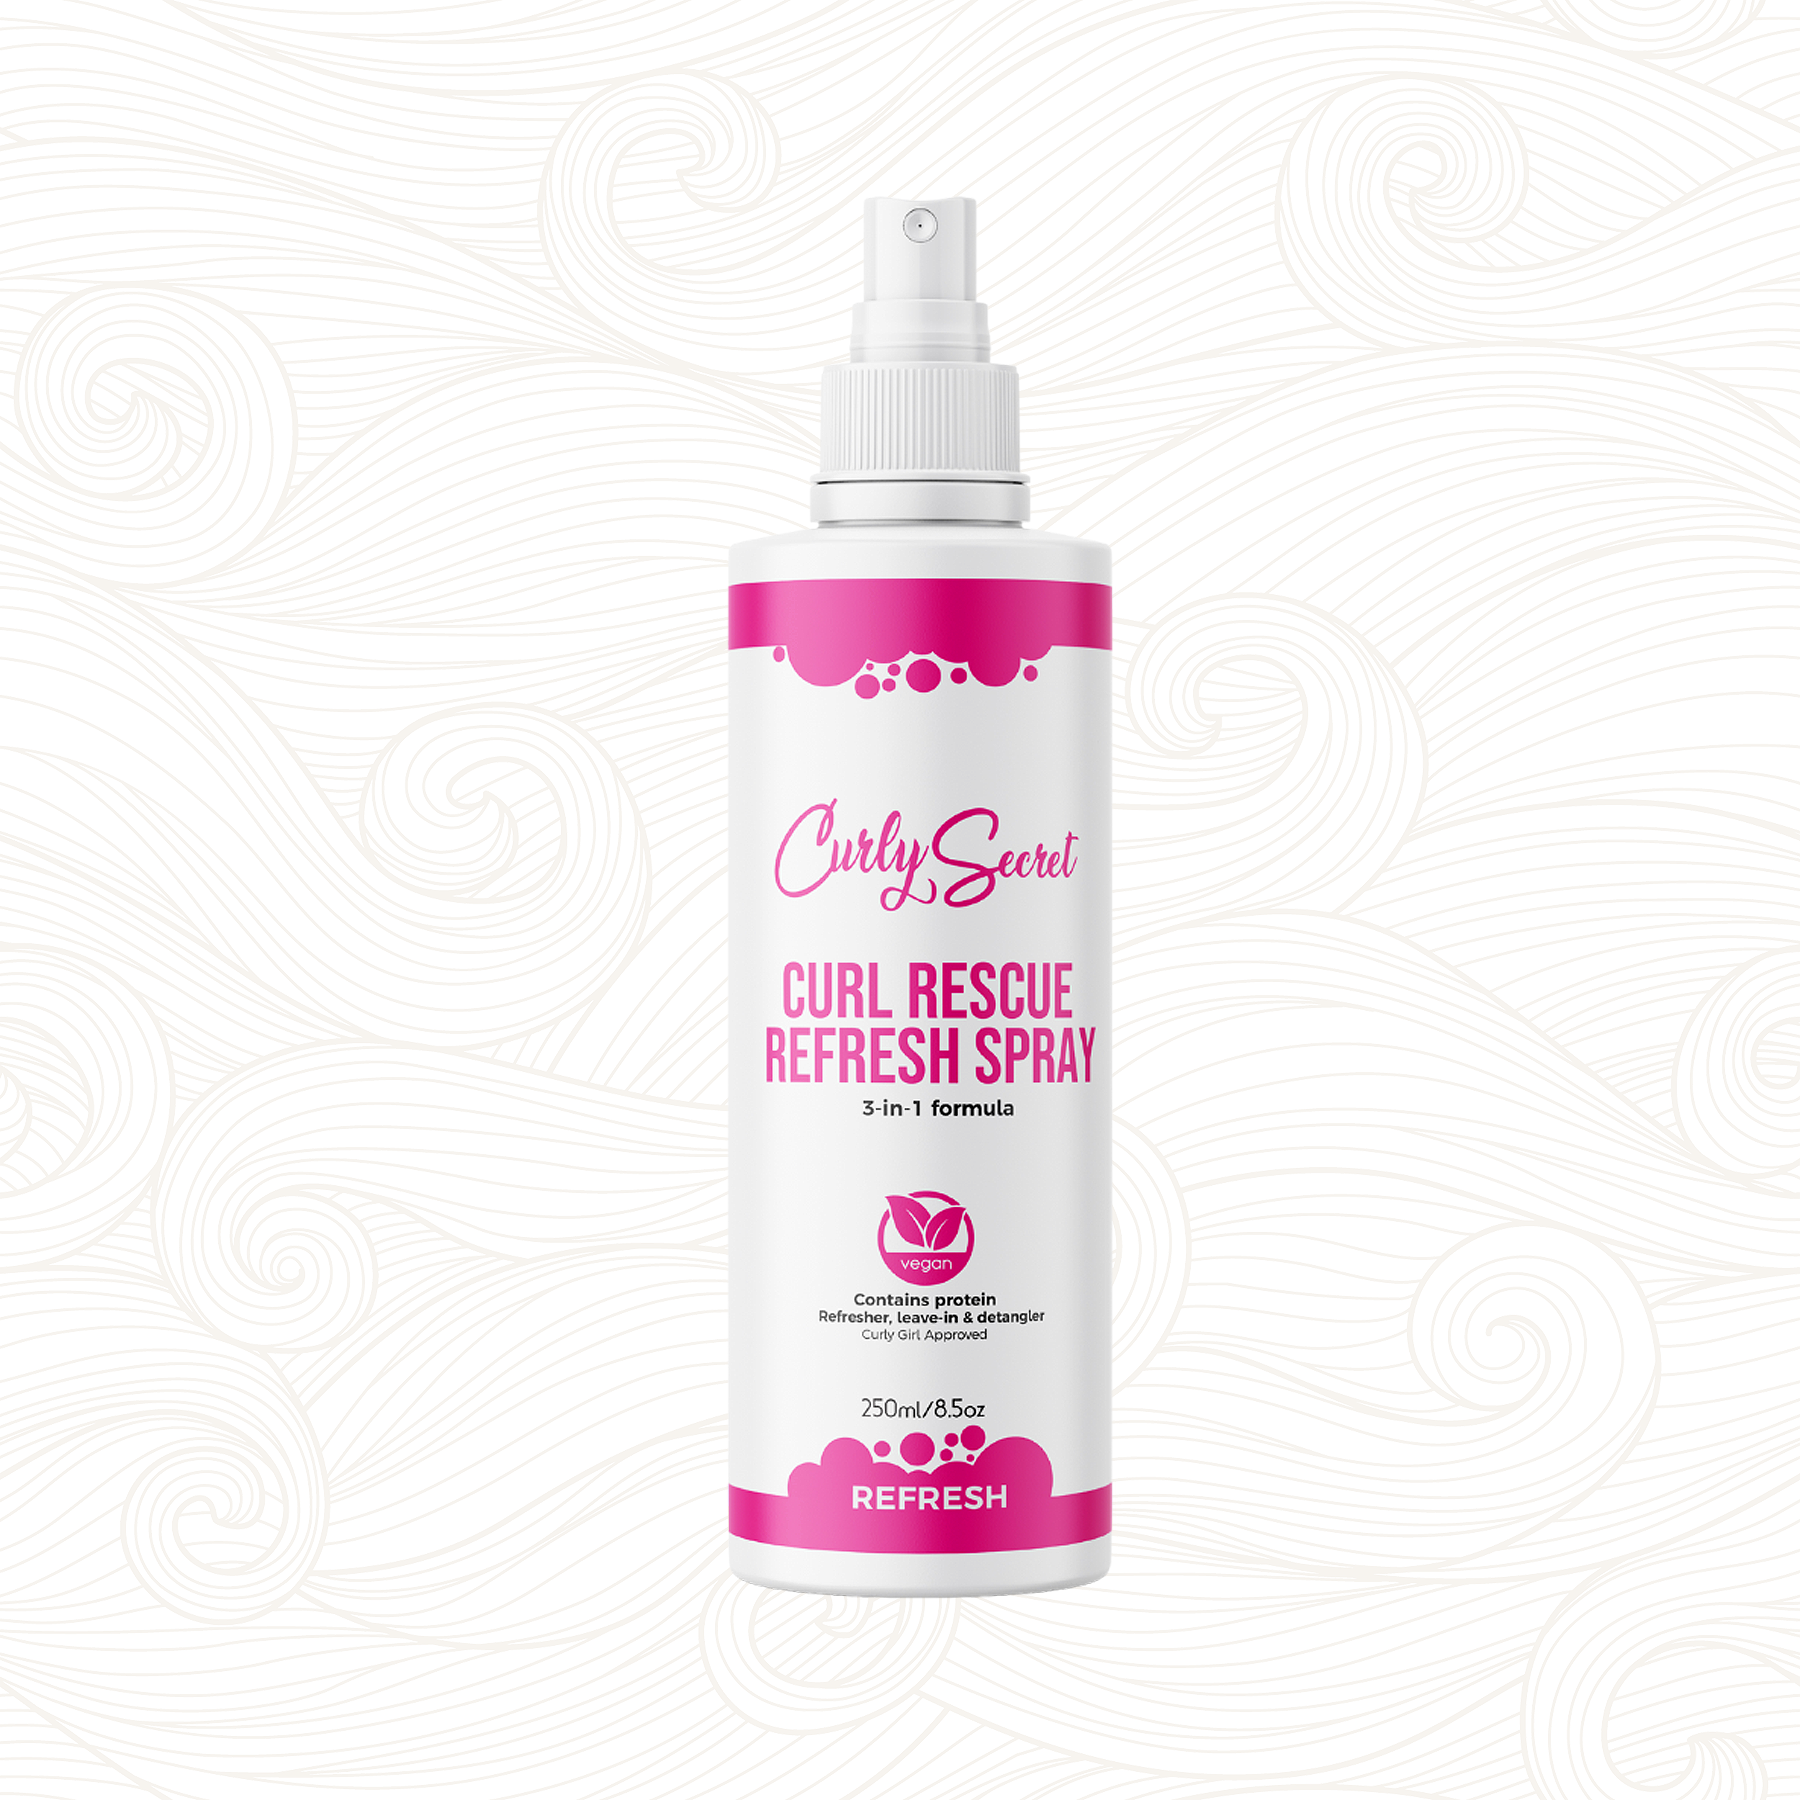 Curly Secret | Curl Rescue Refresh Spray /250ml Refresh Spray Curly Secret